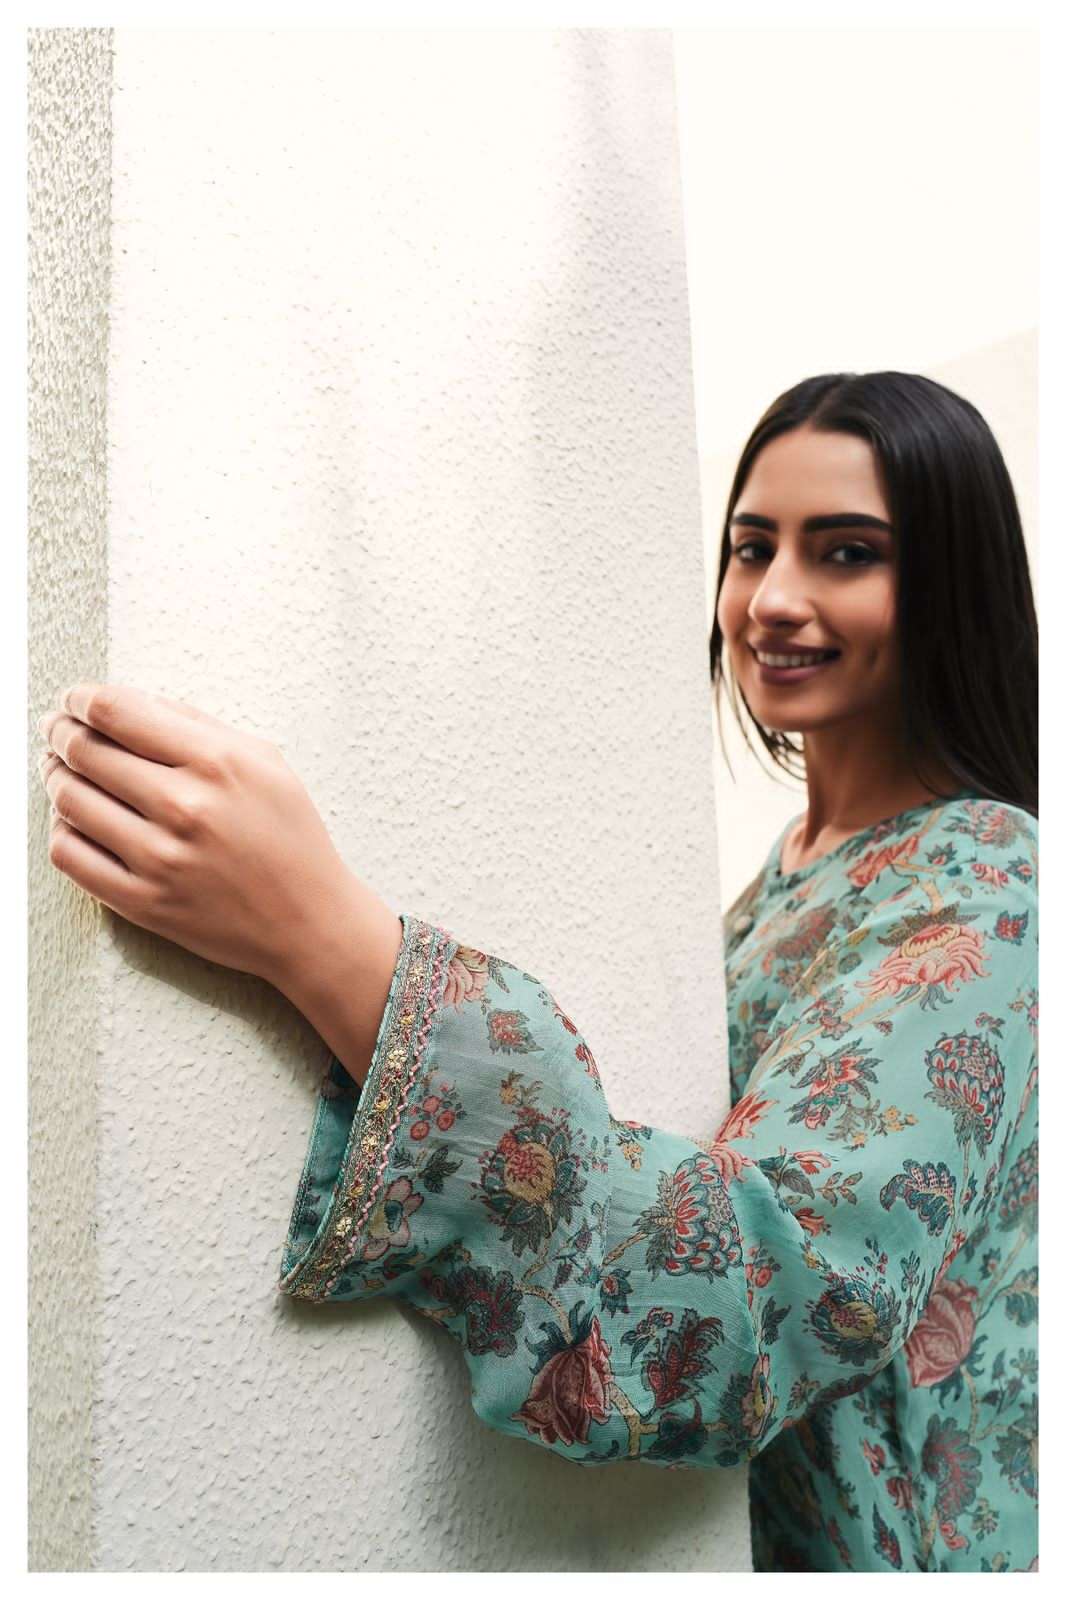 varsha fashion nidha organza digital exclusive salwar kameez online purchasing surat dealer 